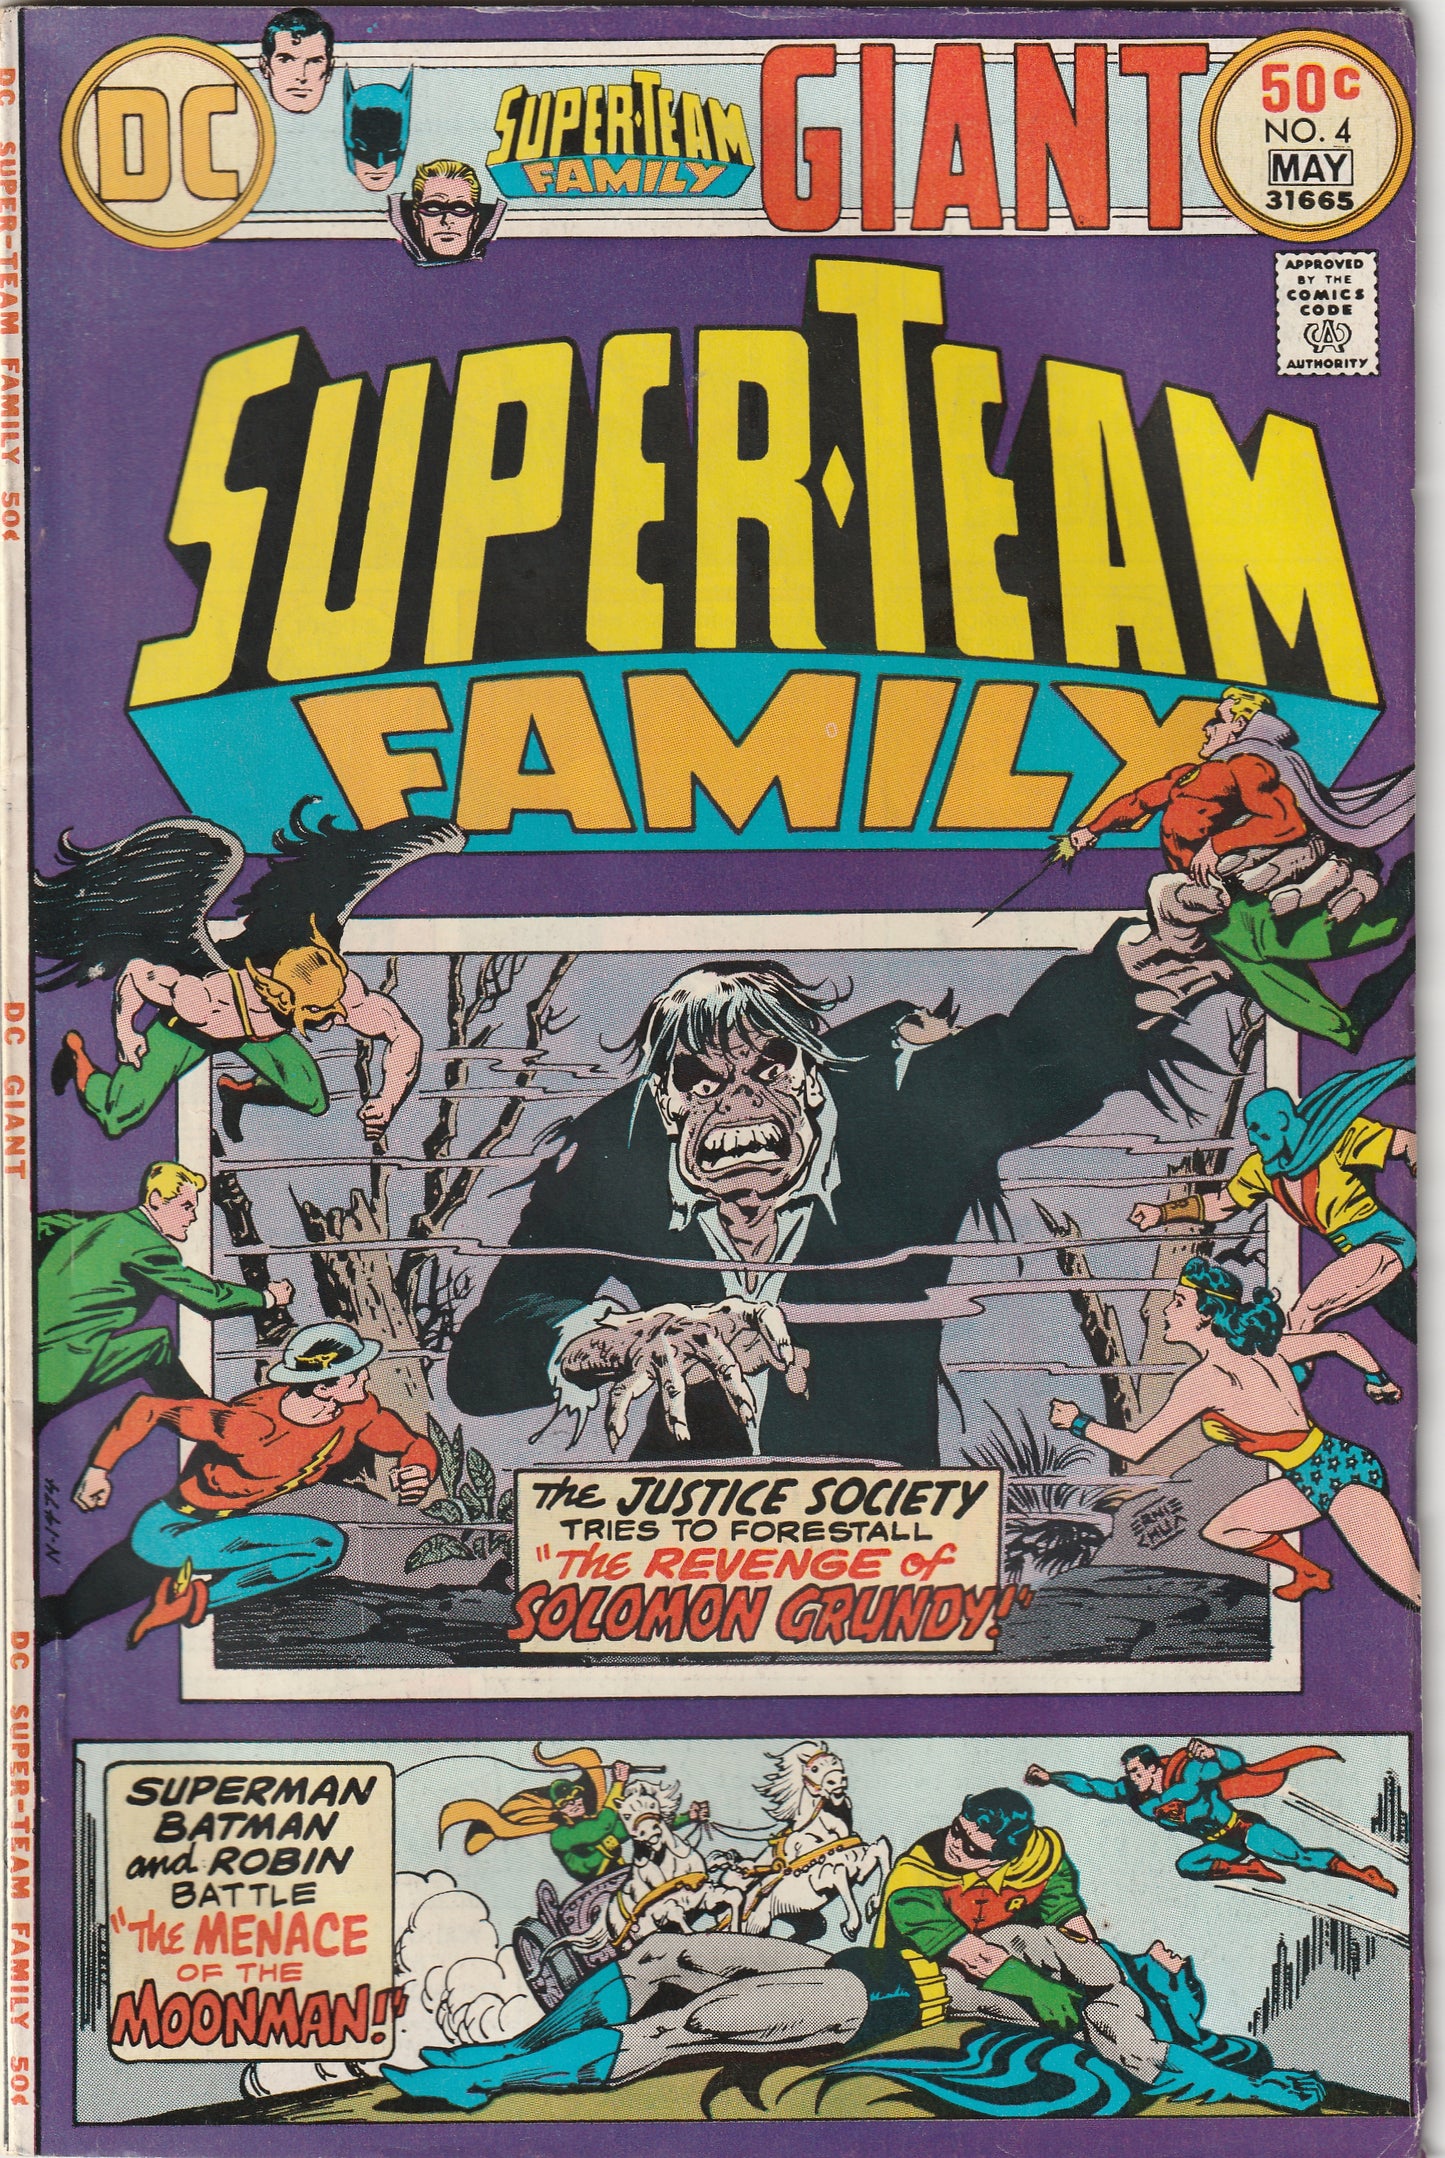 Super-Team Family #4 (1976) Giant - Golden Age JSA, Superman/Batman reprints